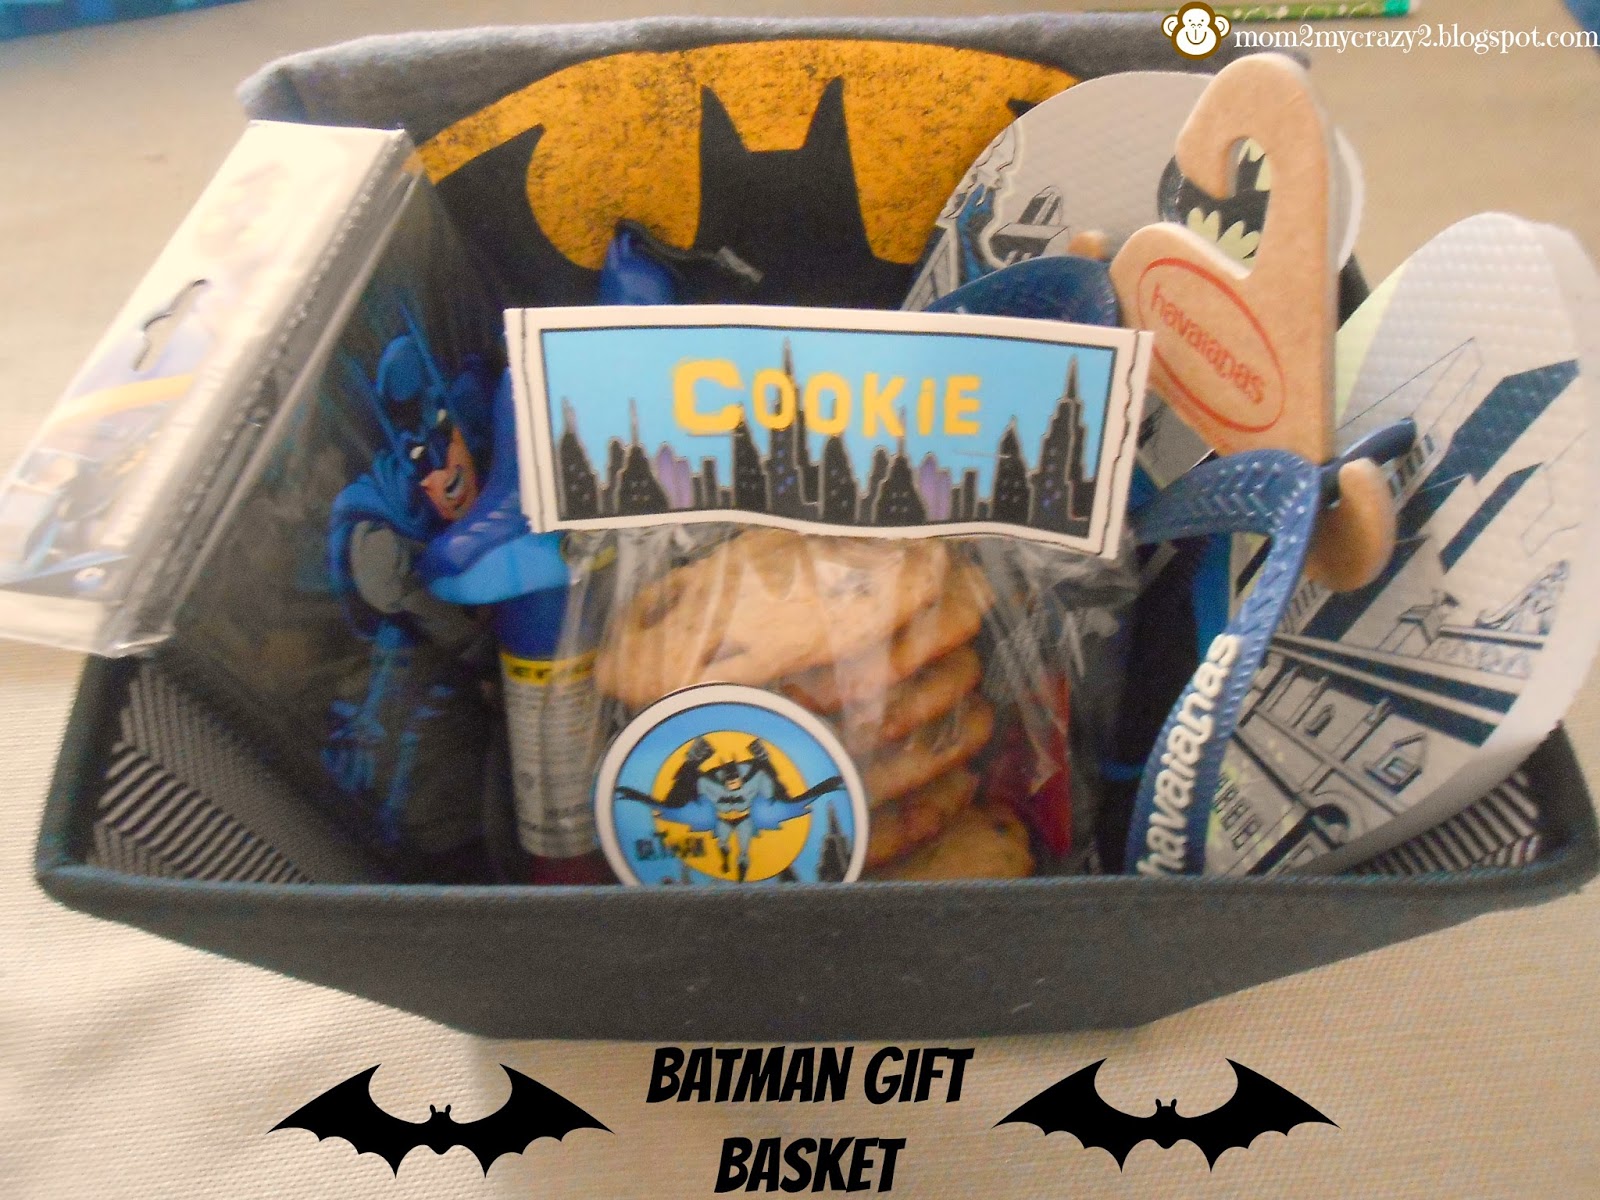 Running away? I'll help you pack.: Themed Birthday Gift ... Batman Gift  Basket